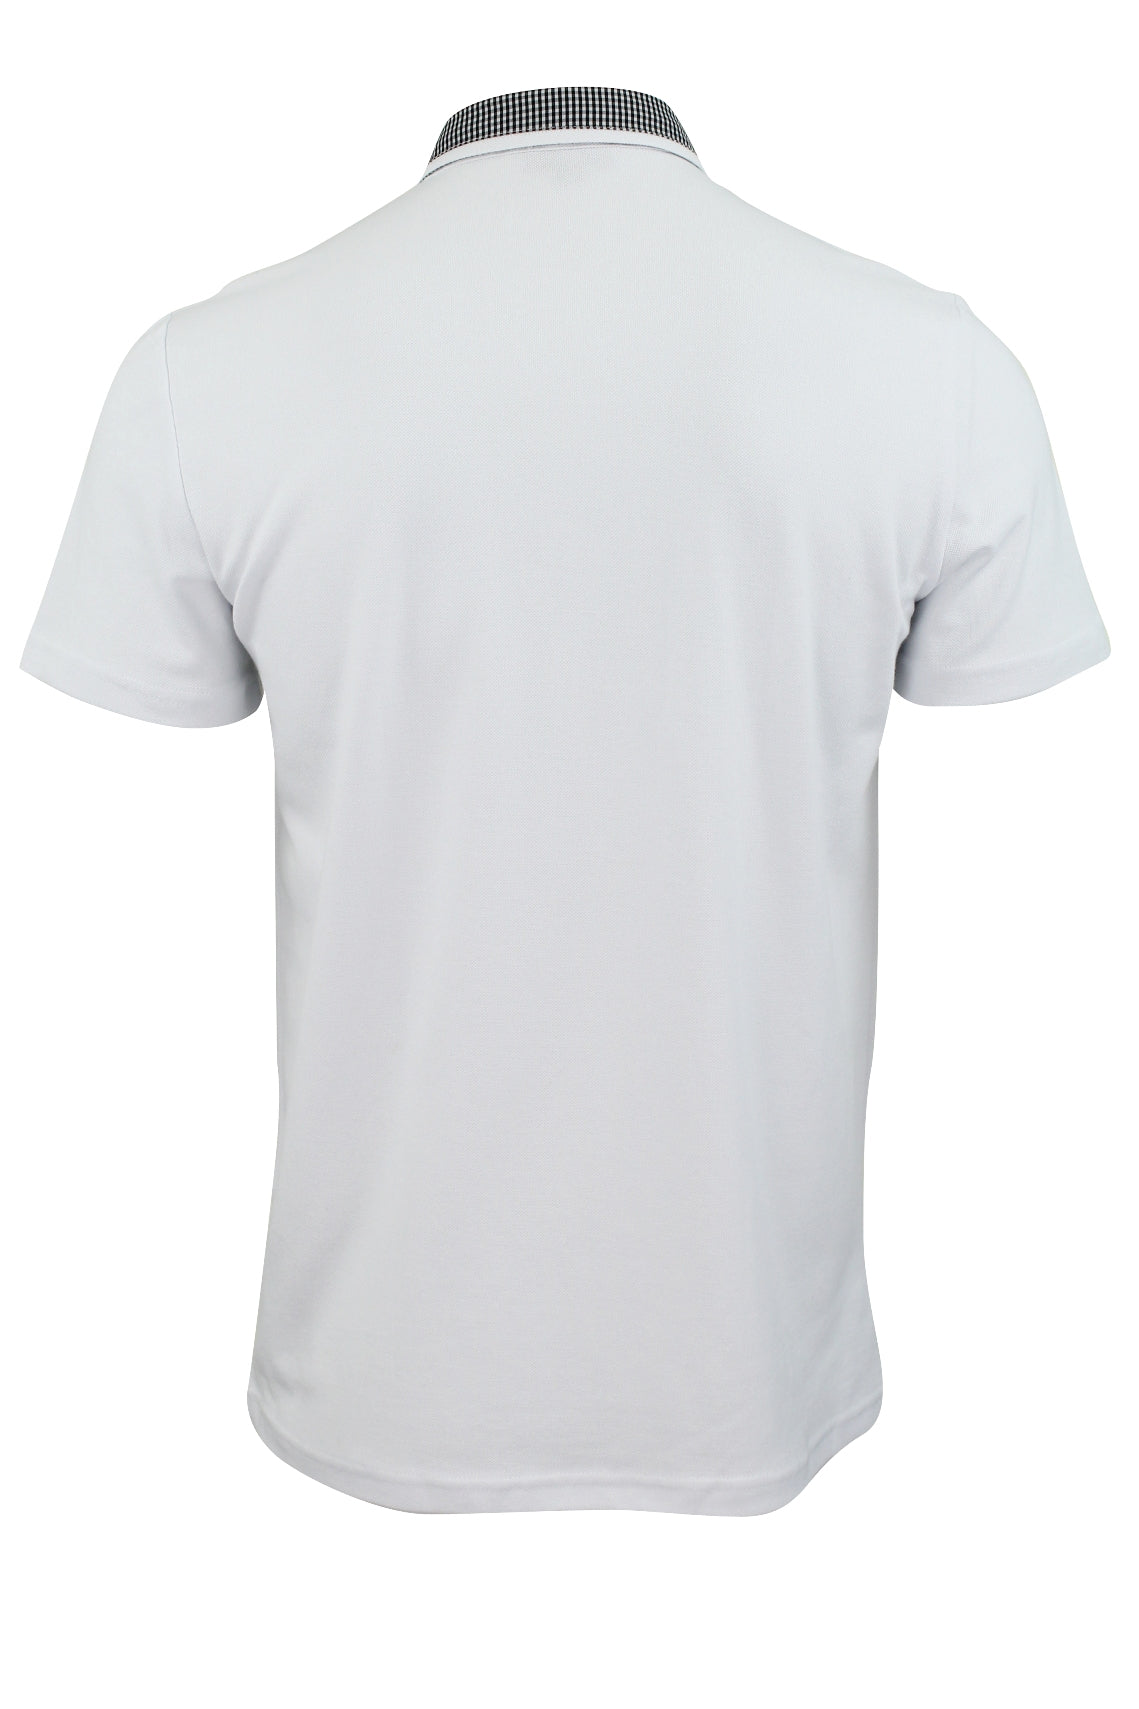 Mens Pique Polo Shirt Xact Clothing Cotton Gingham Collar & Trims Button Down (White)-4